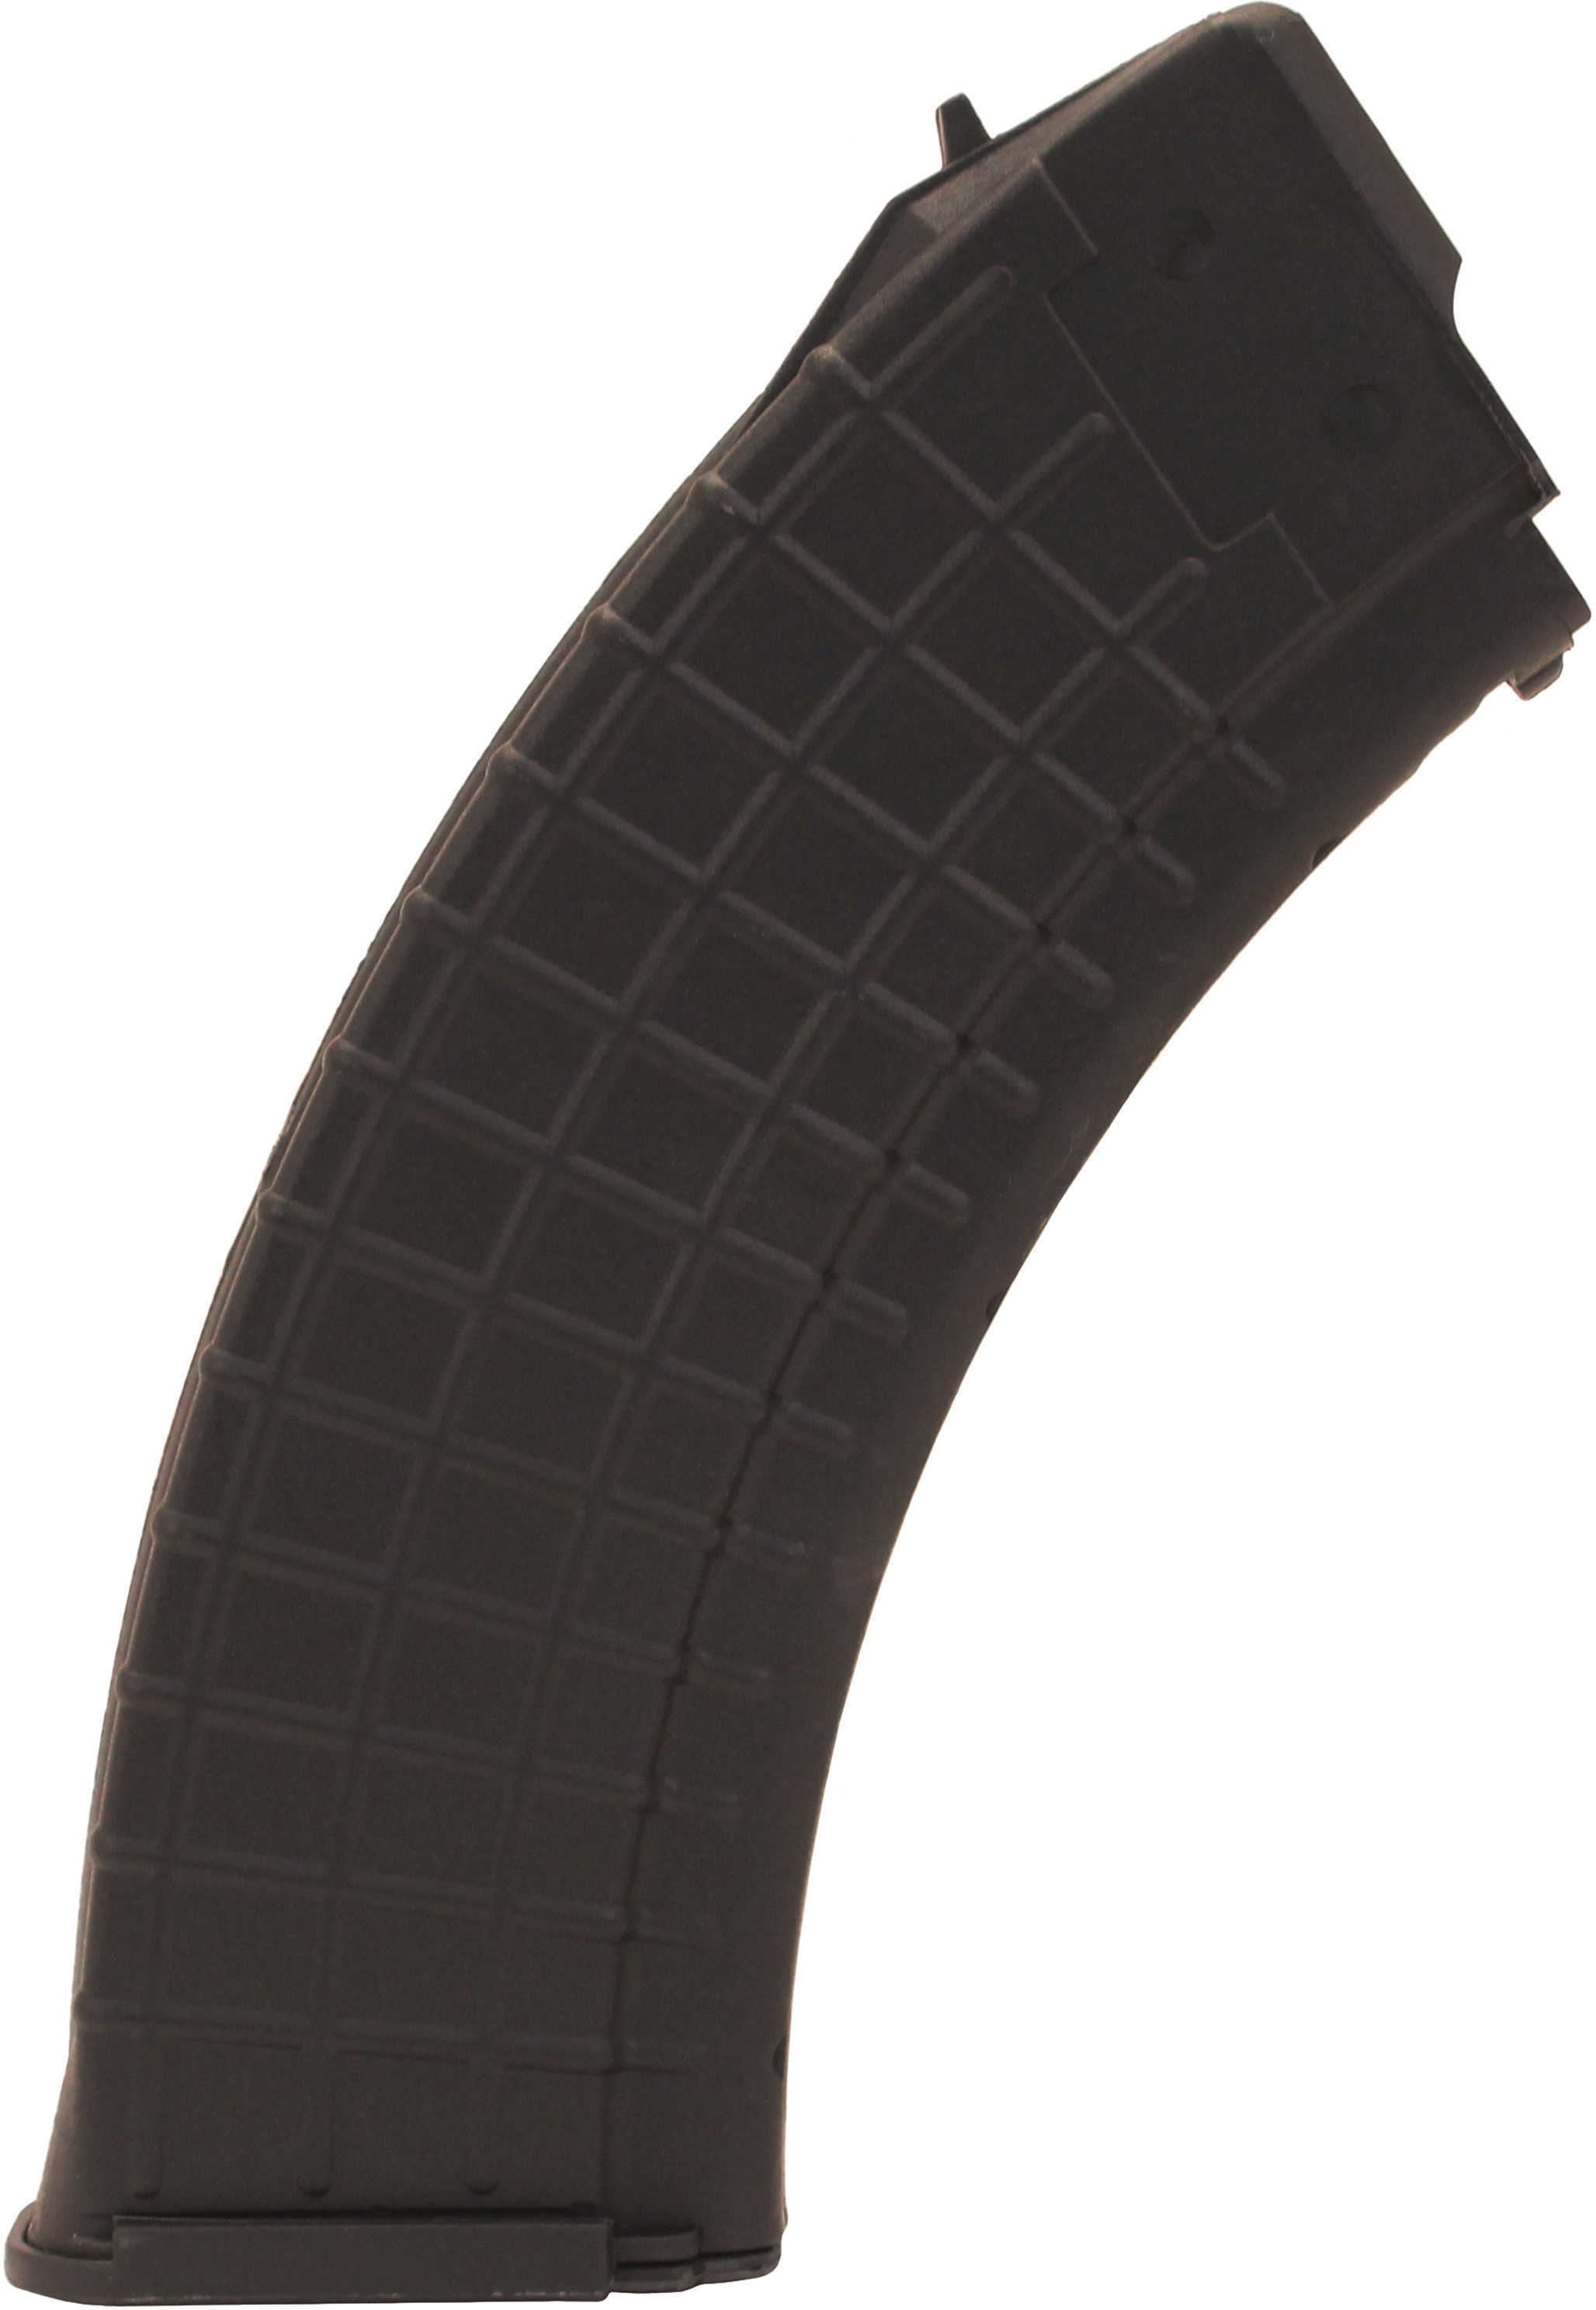 ProMag Polymer Magazine AK-47 7.62X39mm Black 30 r-img-1